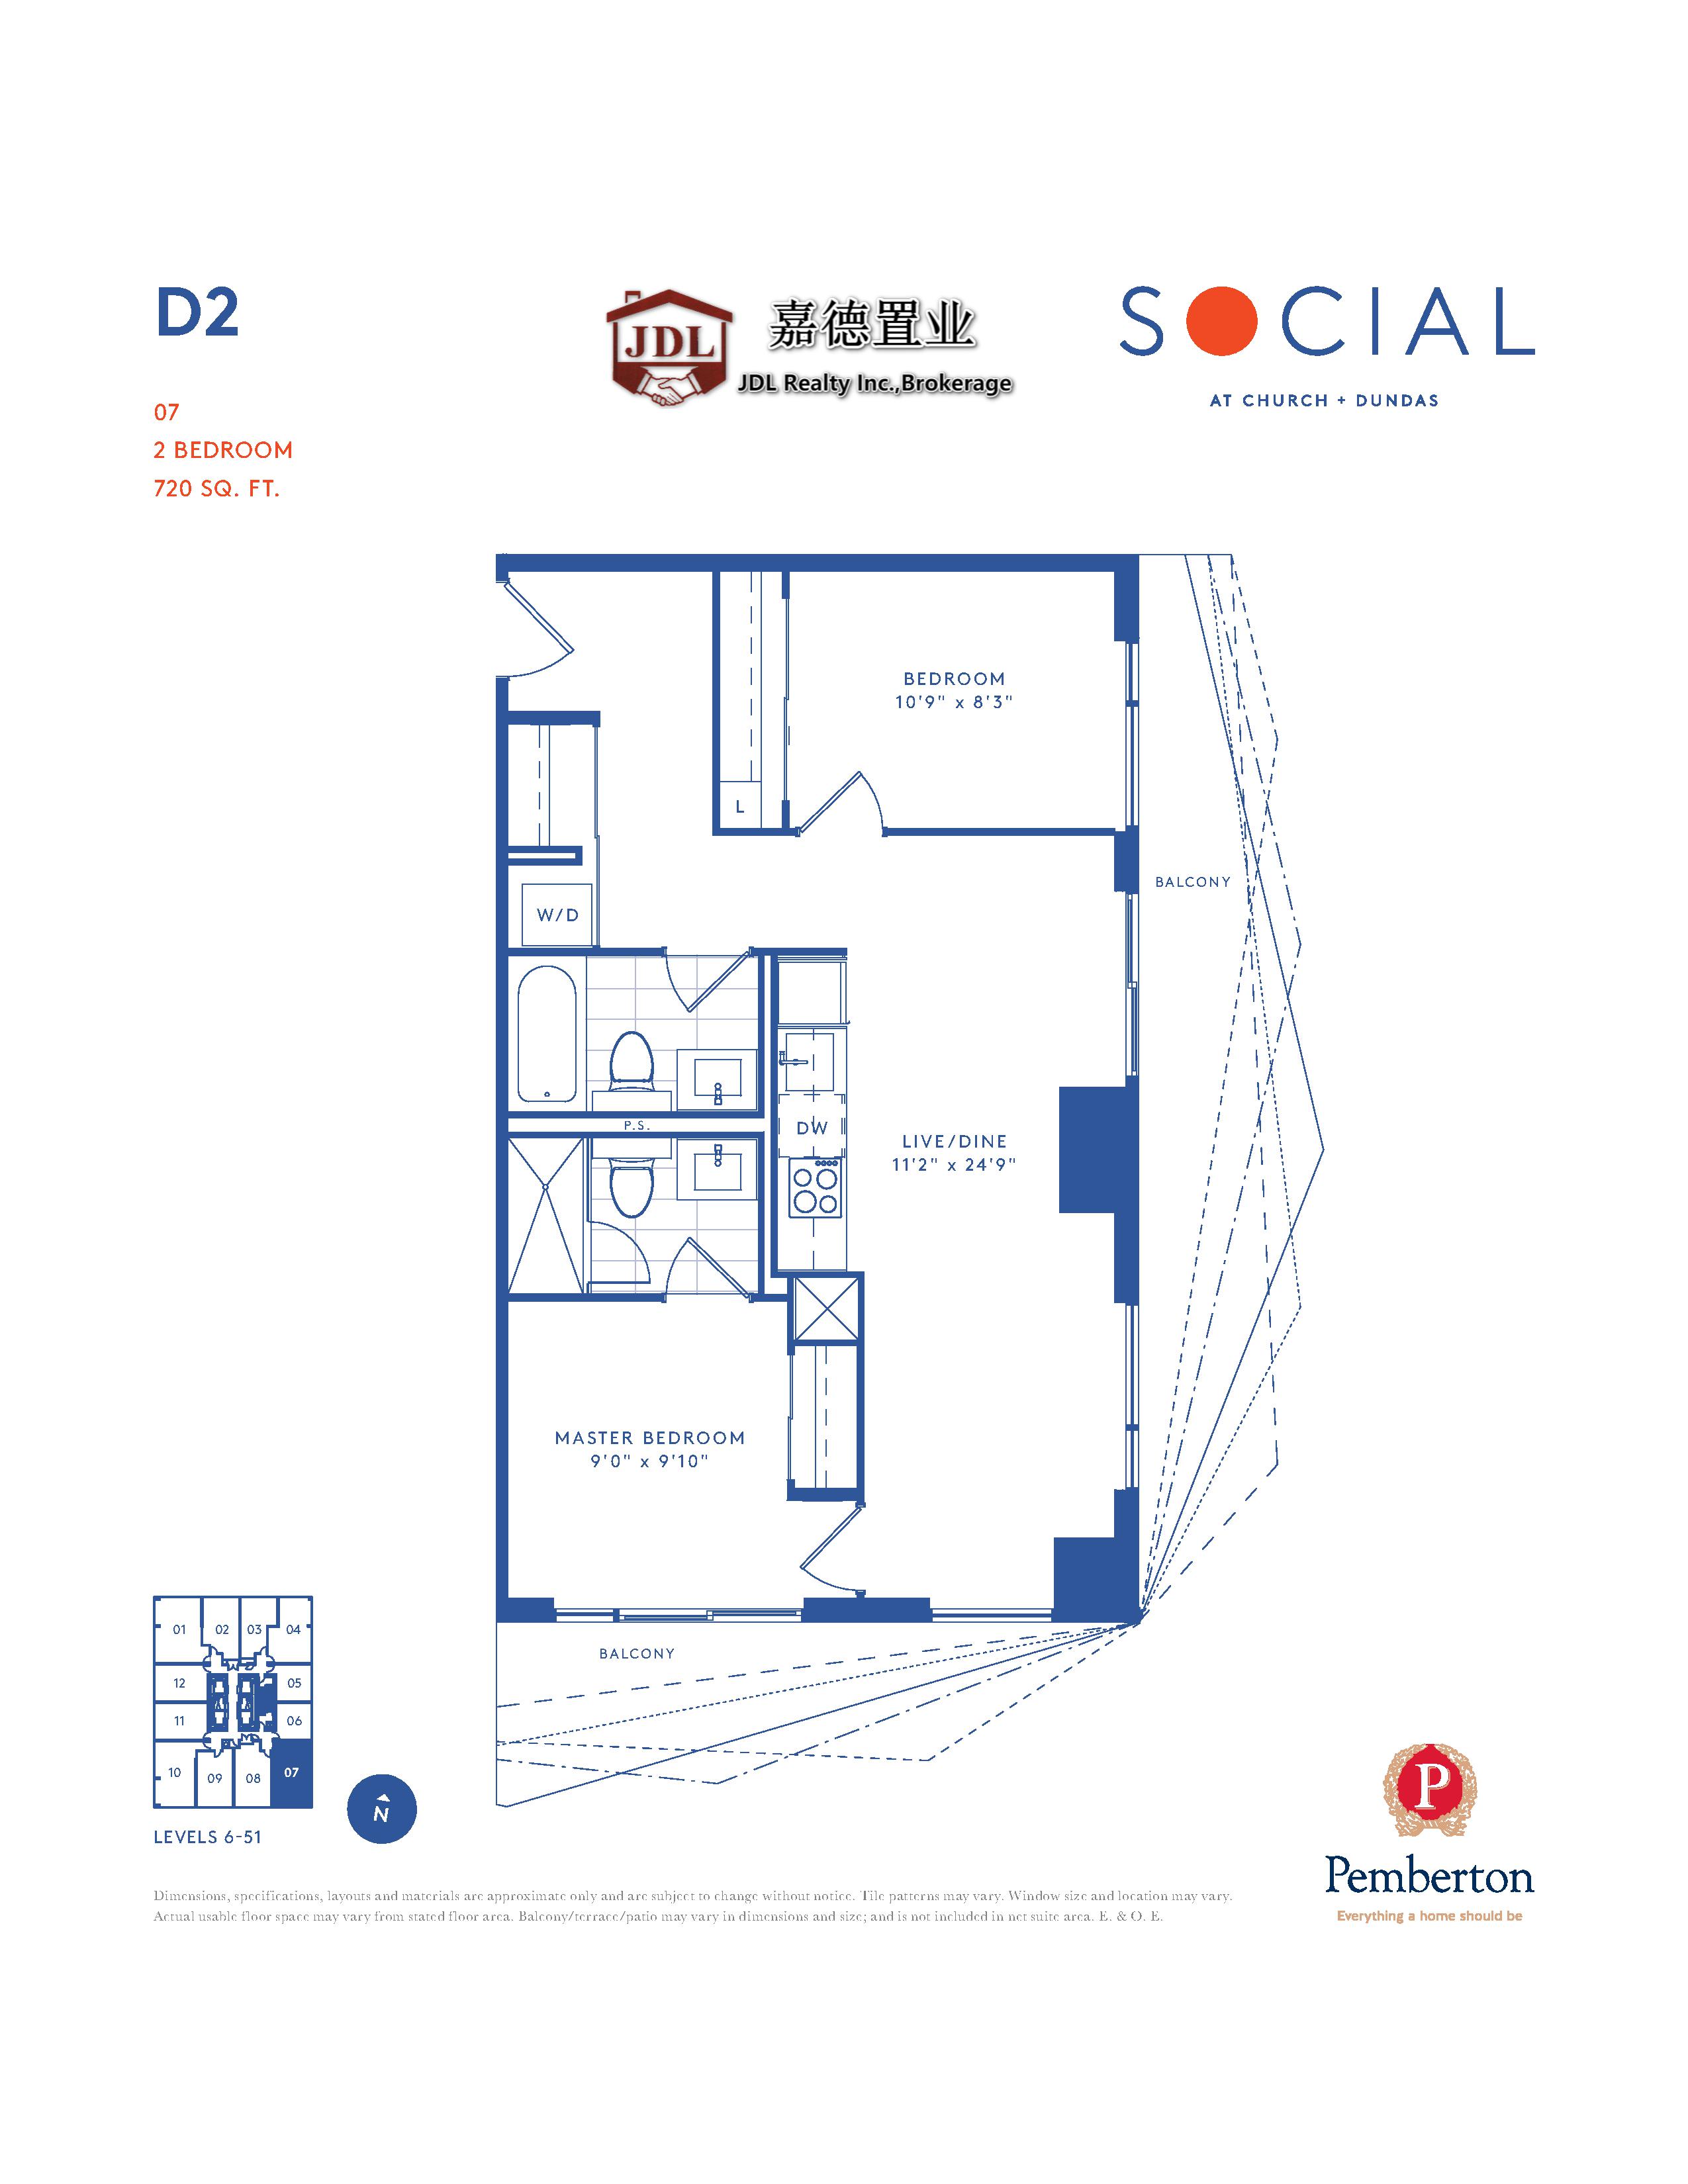 Social Tower floor plan 1 9